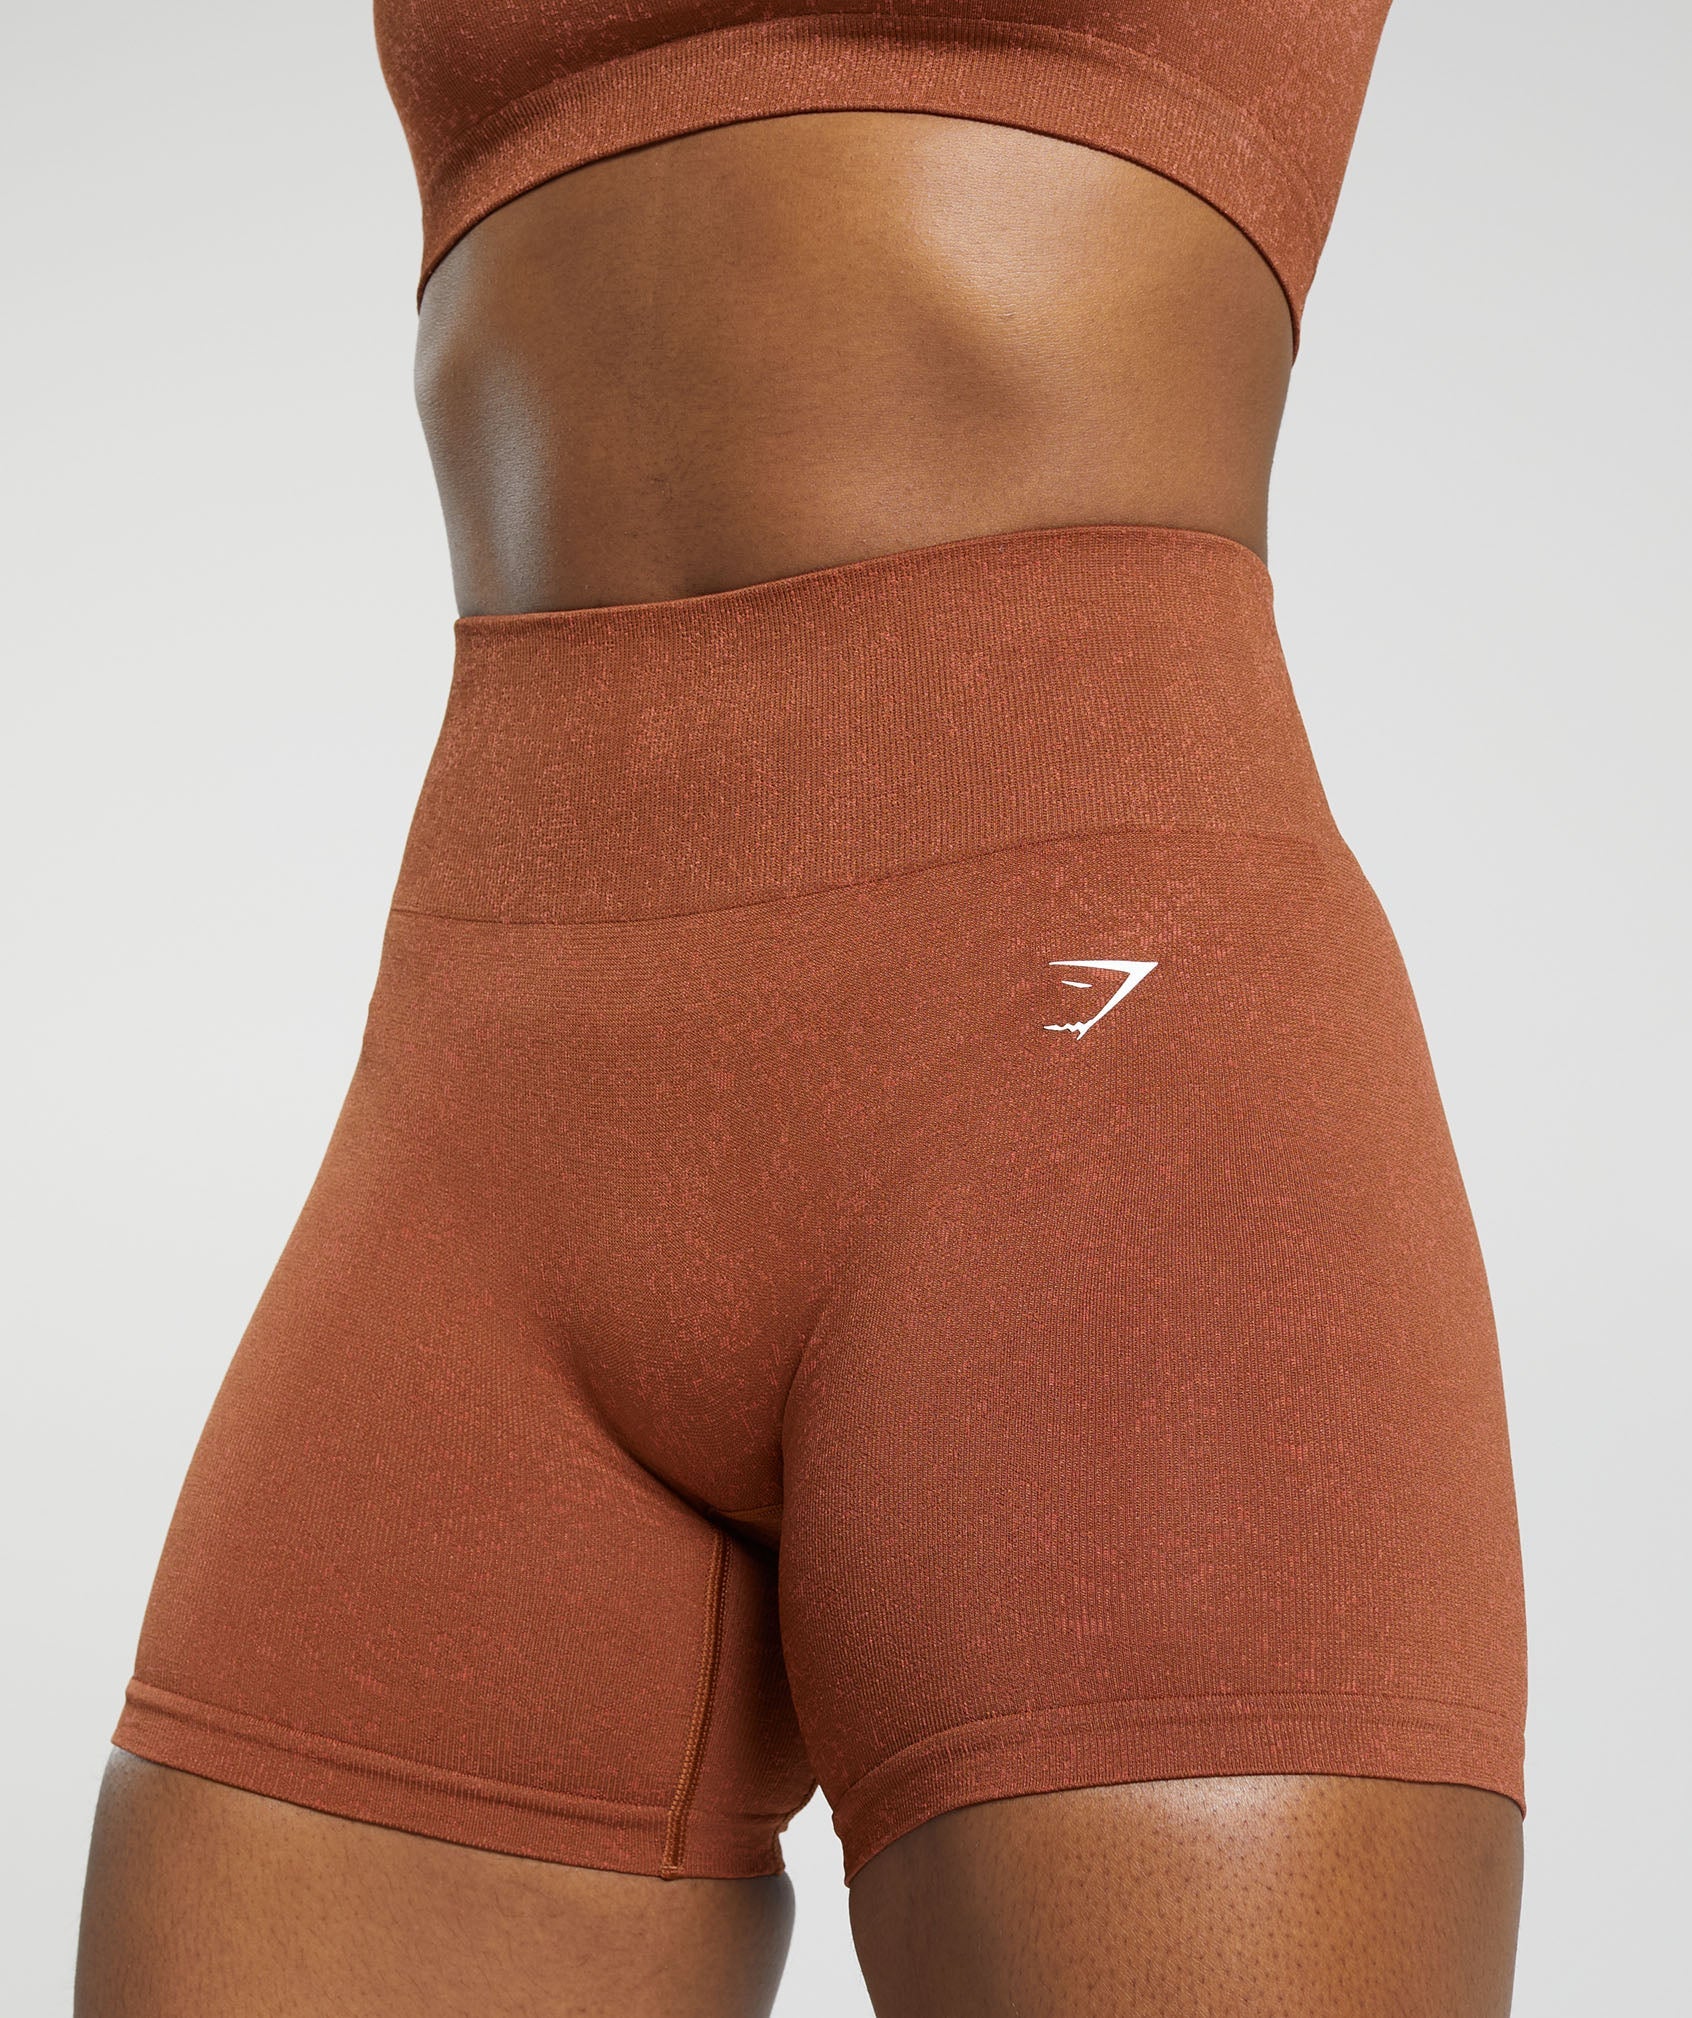 Adapt Fleck Seamless Shorts in Copper Brown/Terracotta Orange - view 6